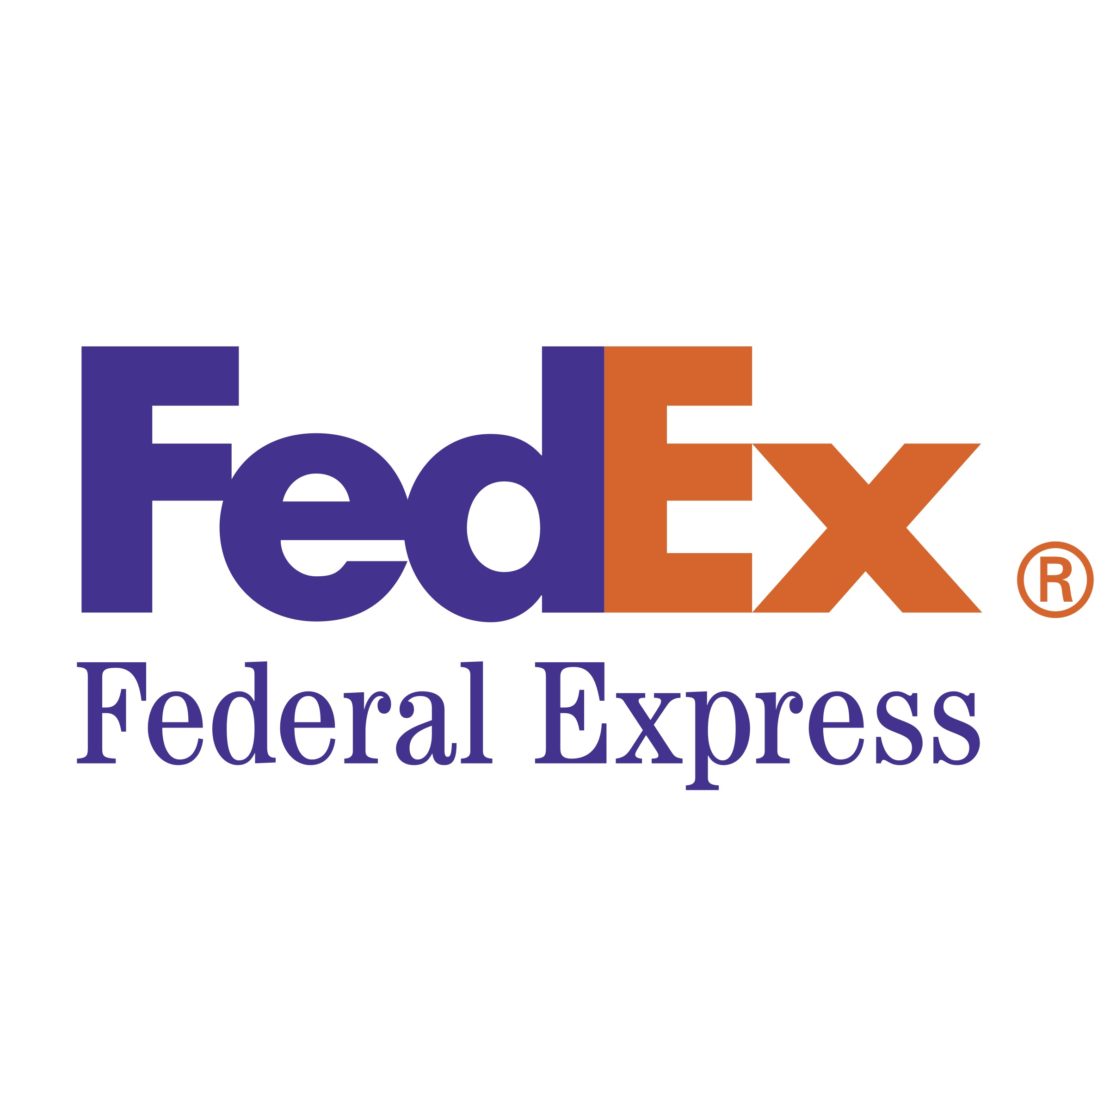 Logotipo FedEx federal xpress